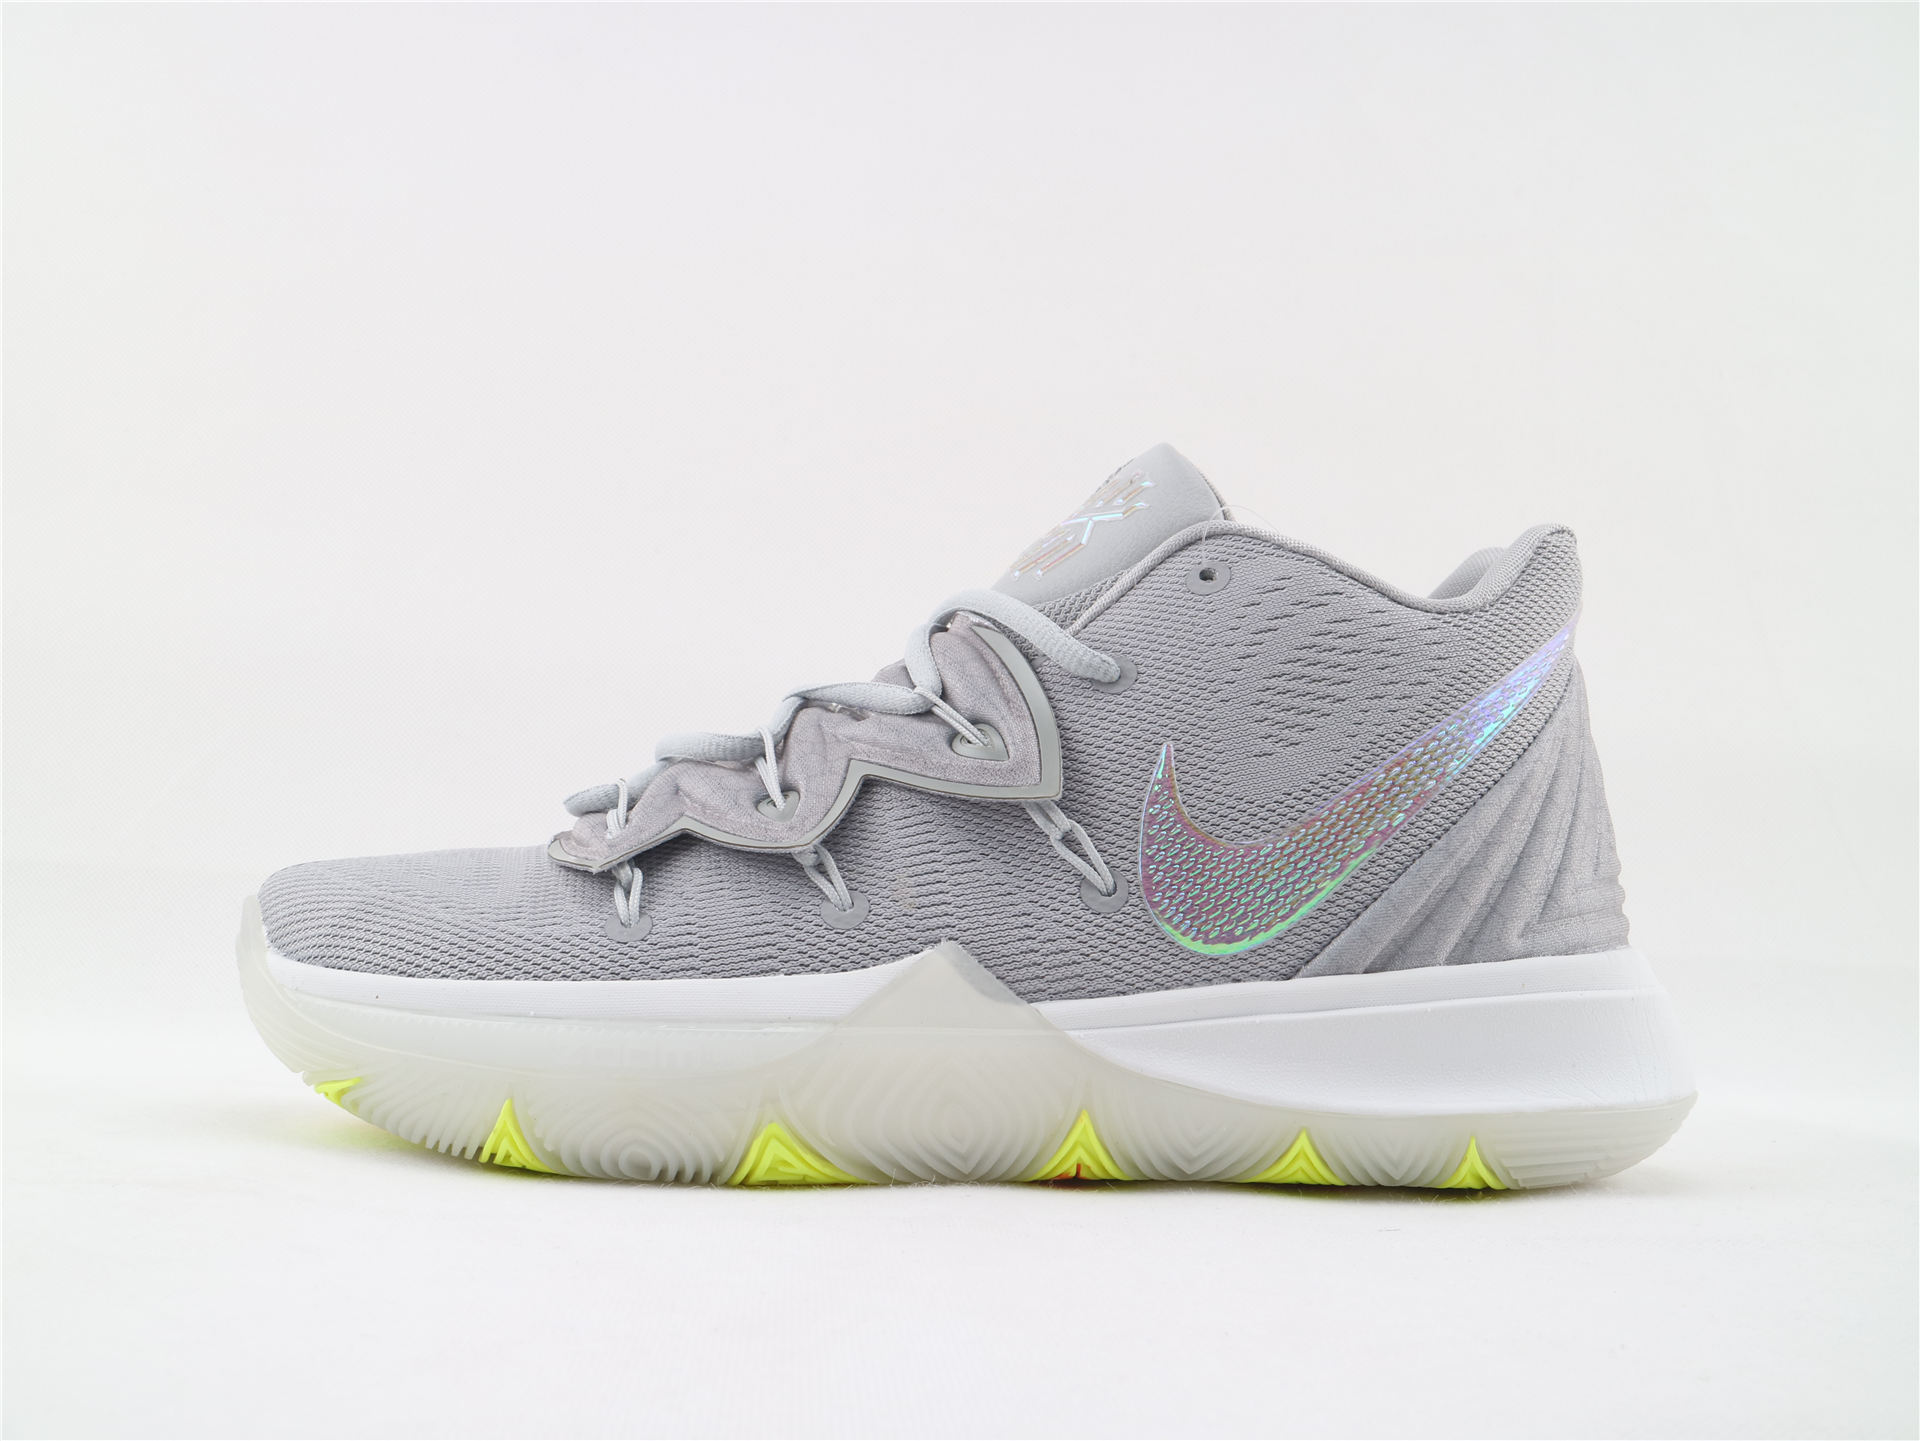 Nike kyrie 5 Spongebob basketball shoes for Women and Men